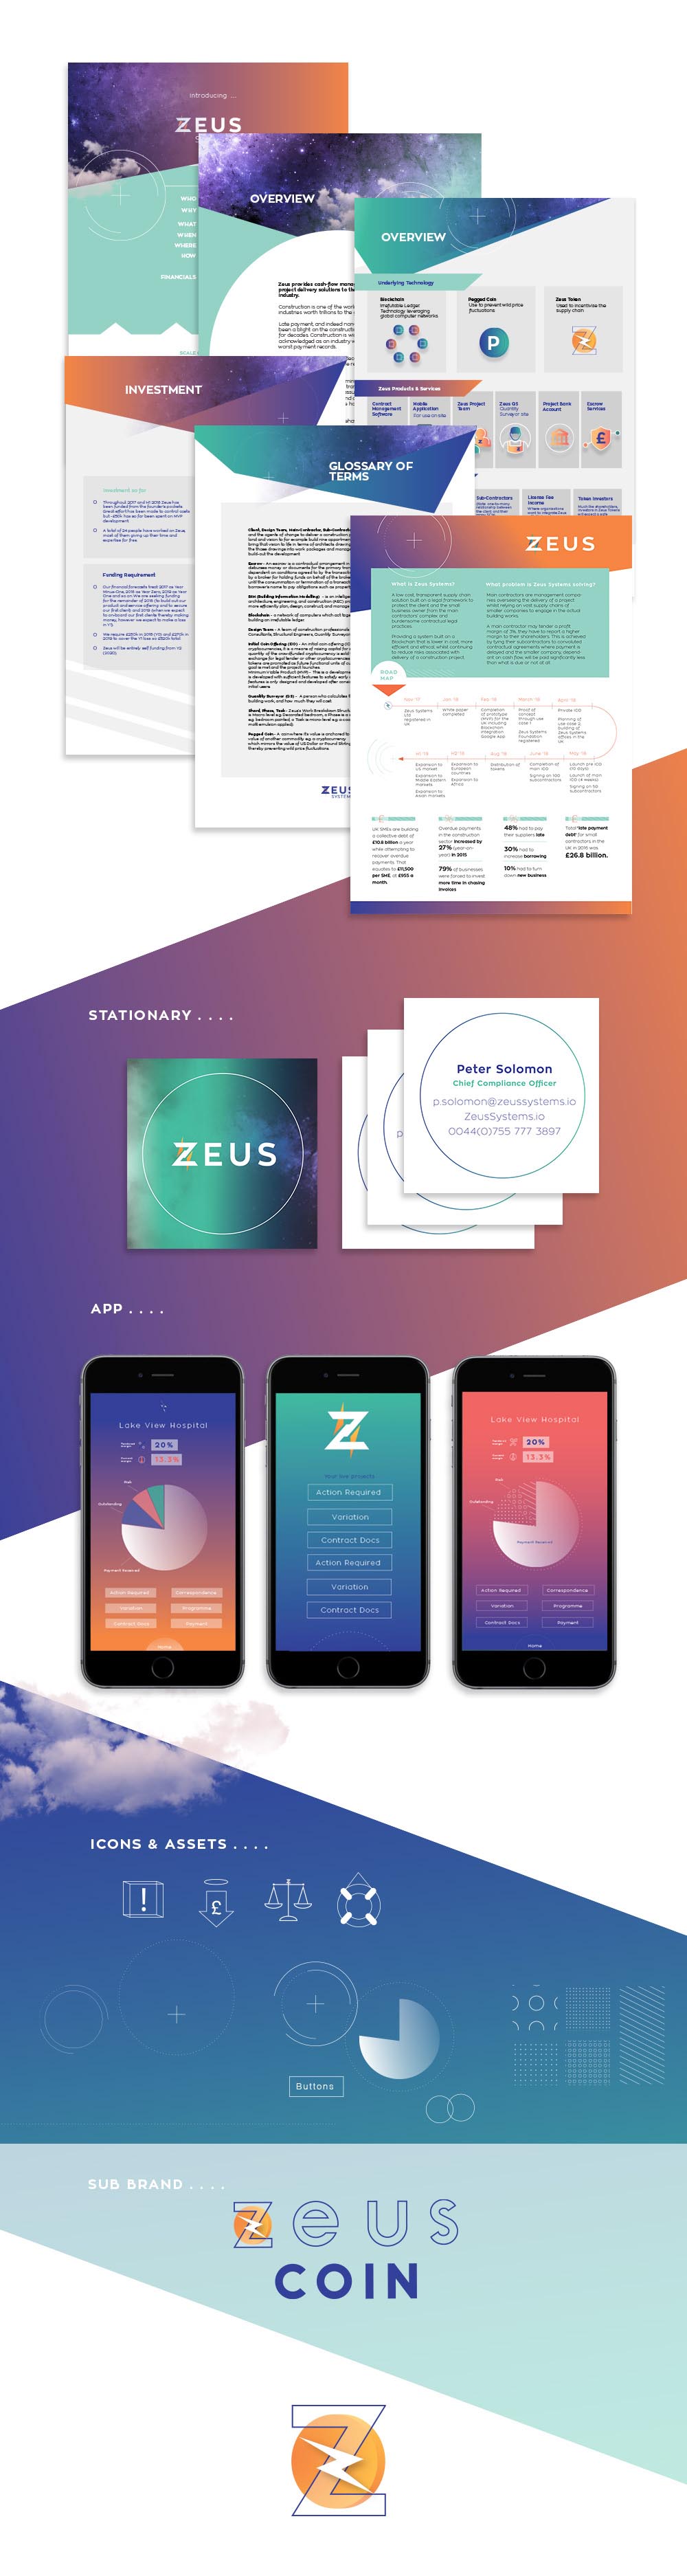 Presentation Design for Print & Web plus Branding, Marketing & Web Design for Zeus